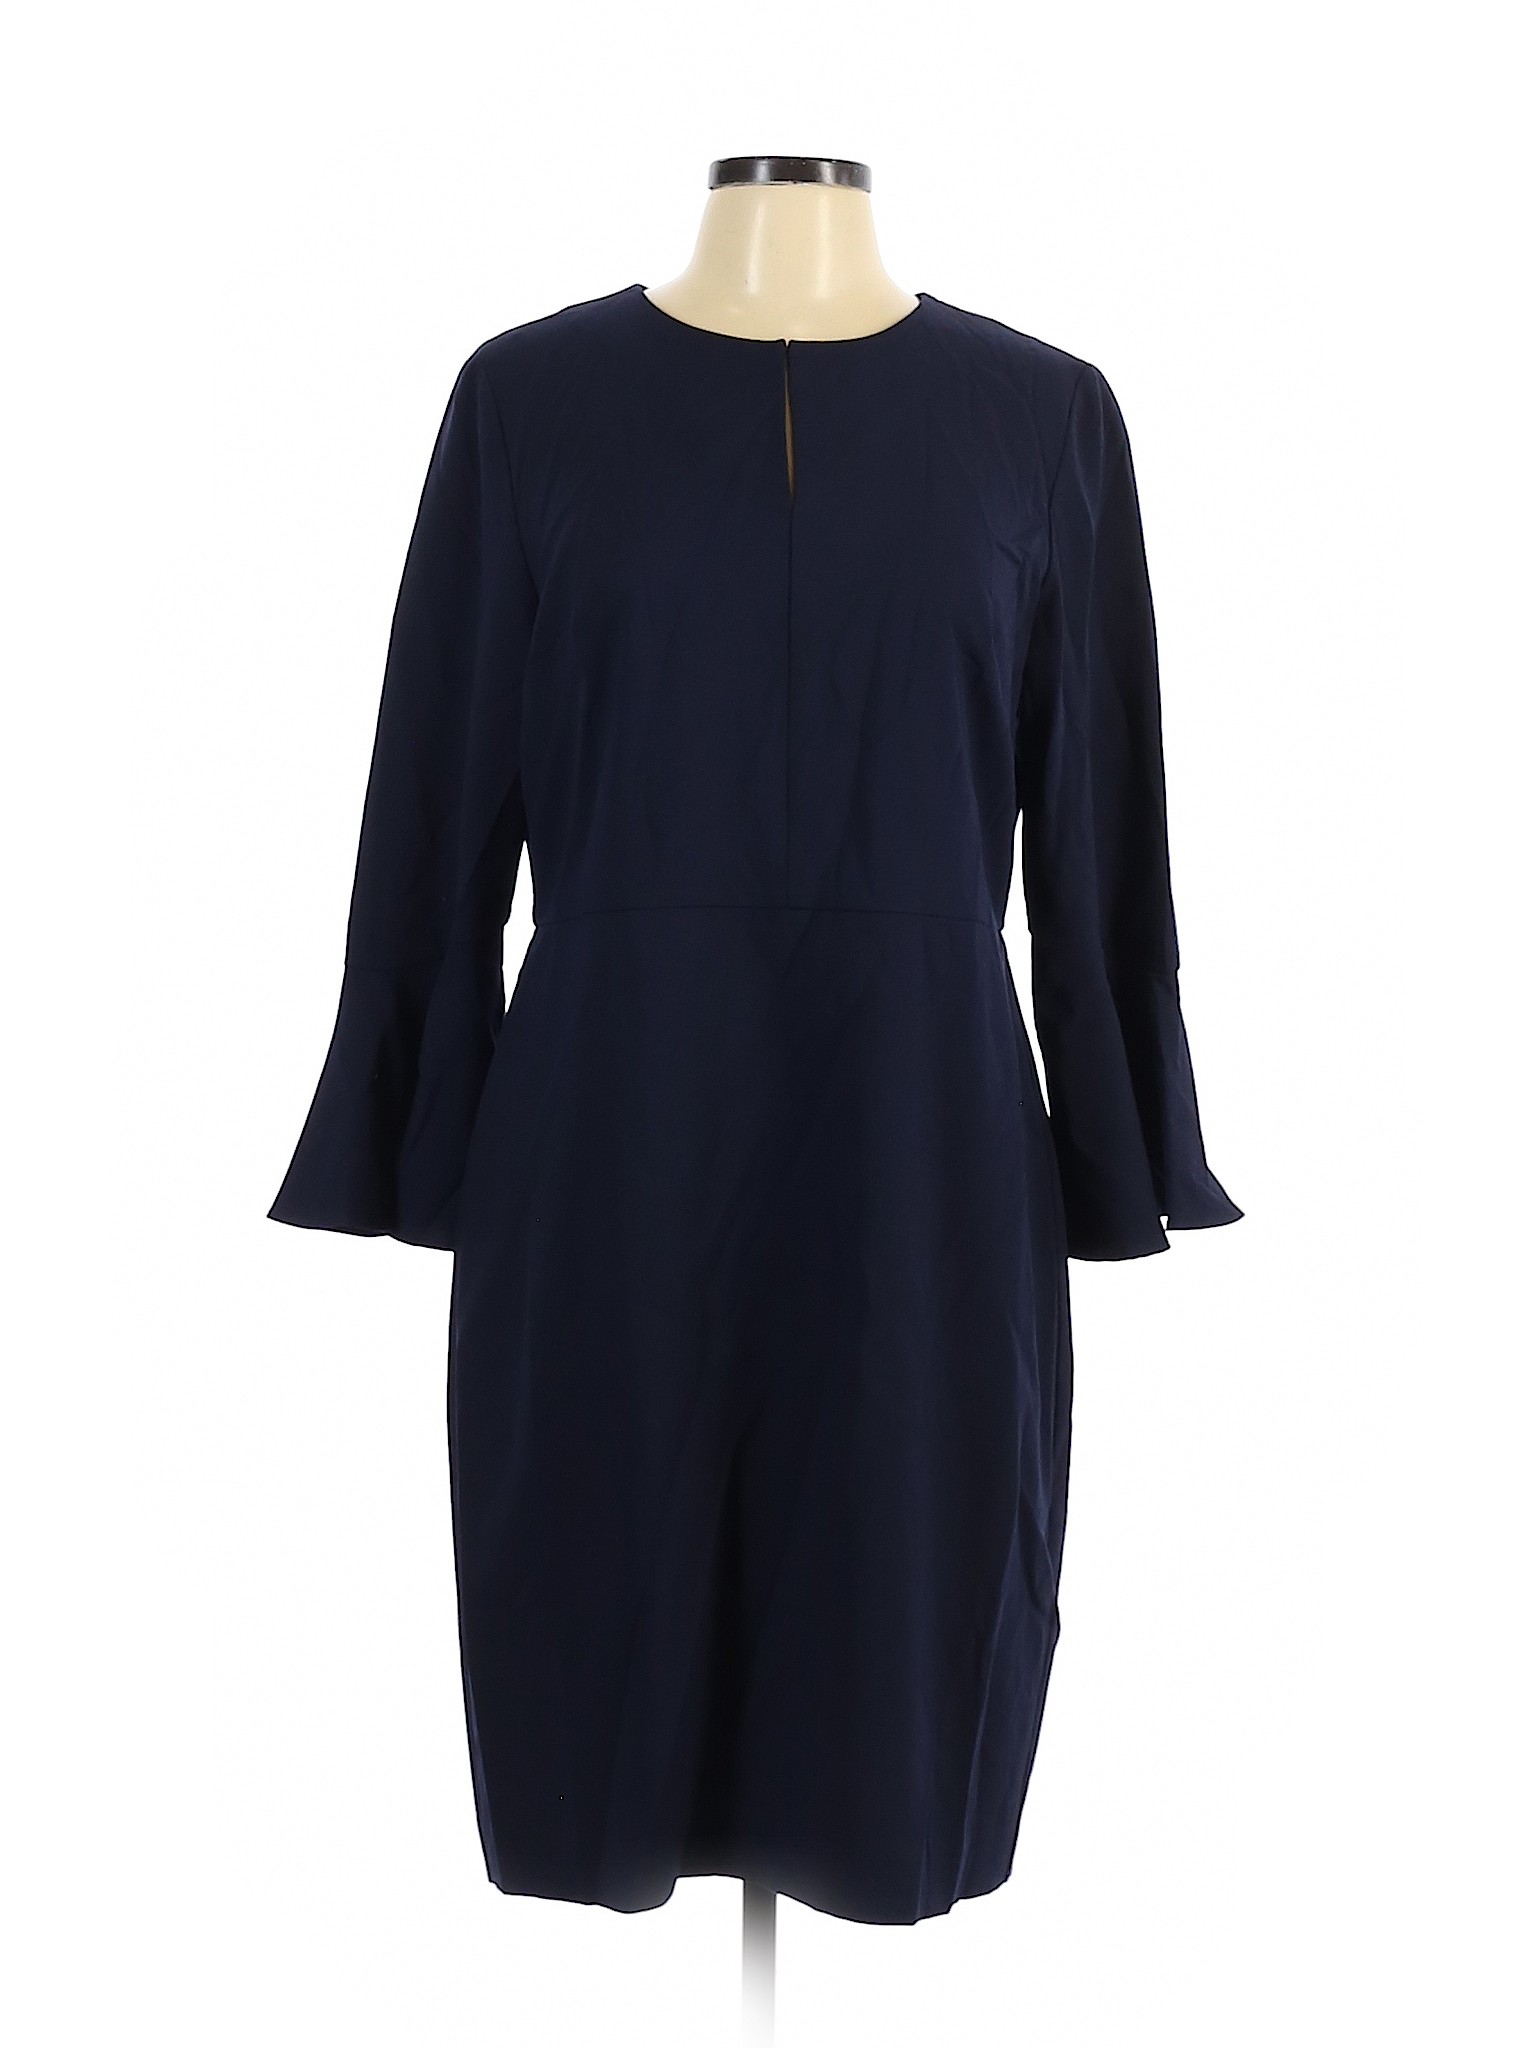 NWT Ann Taylor Women Blue Casual Dress 12 | eBay